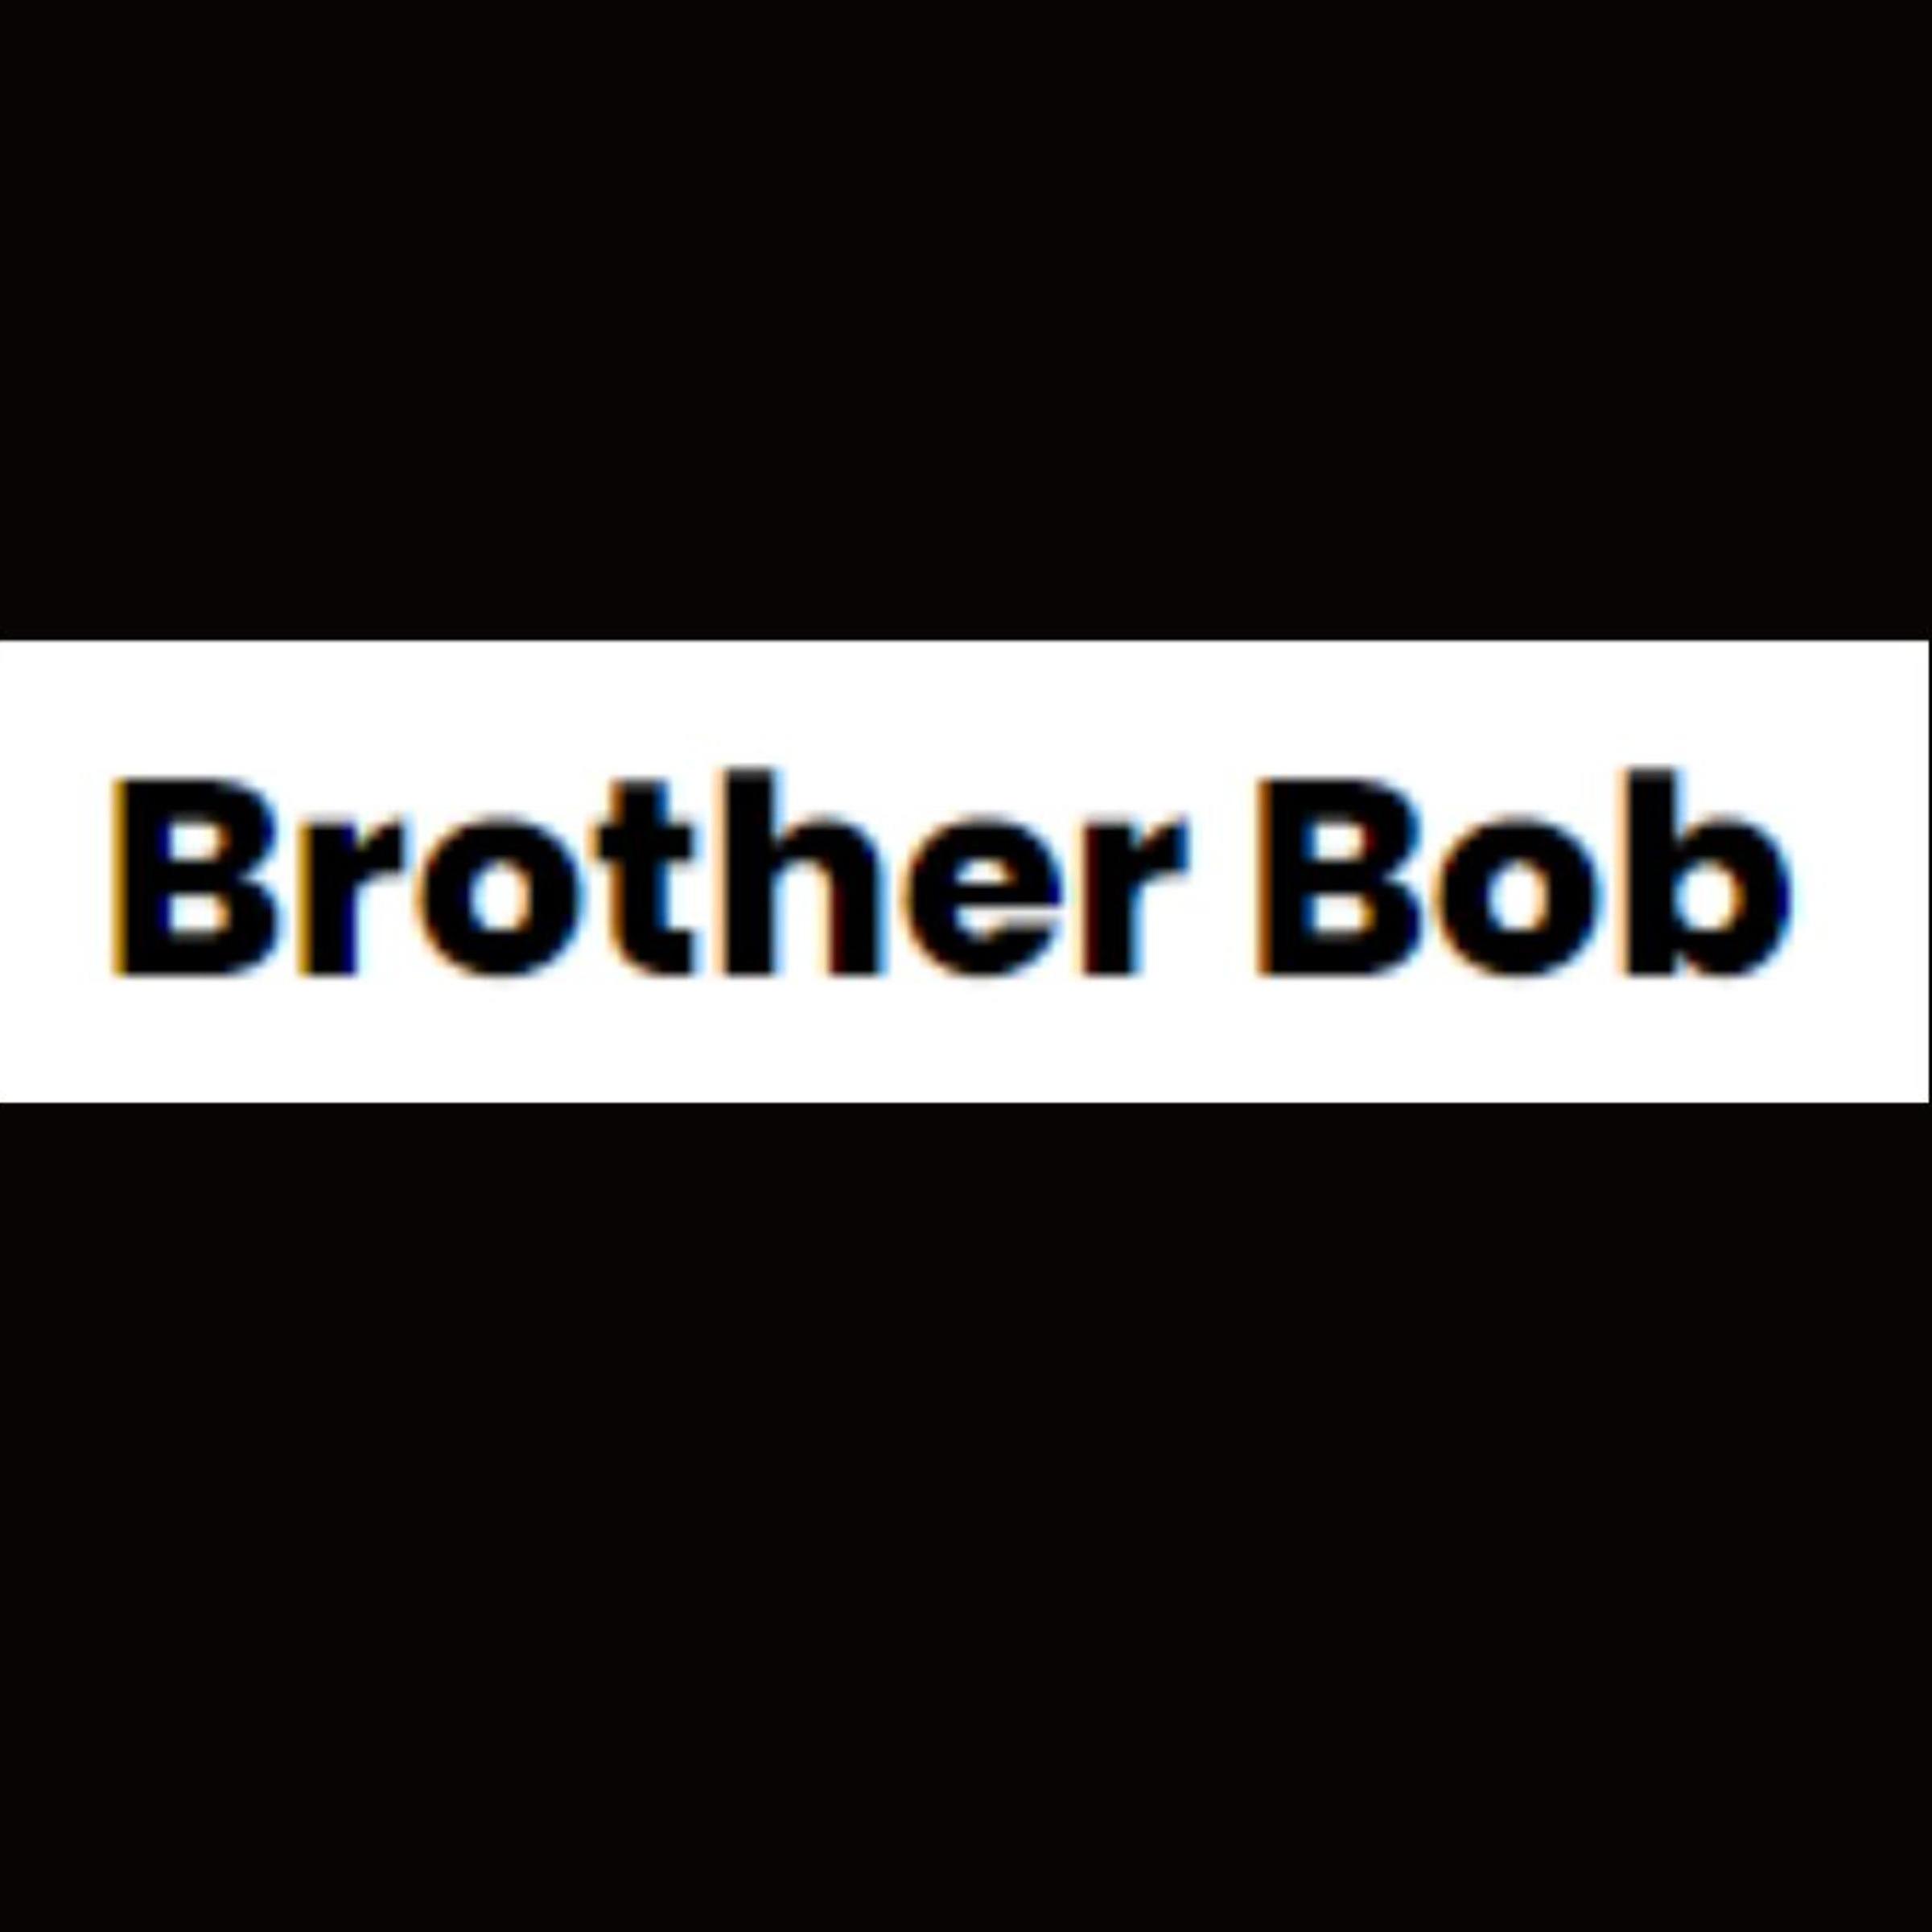 Brother Bob